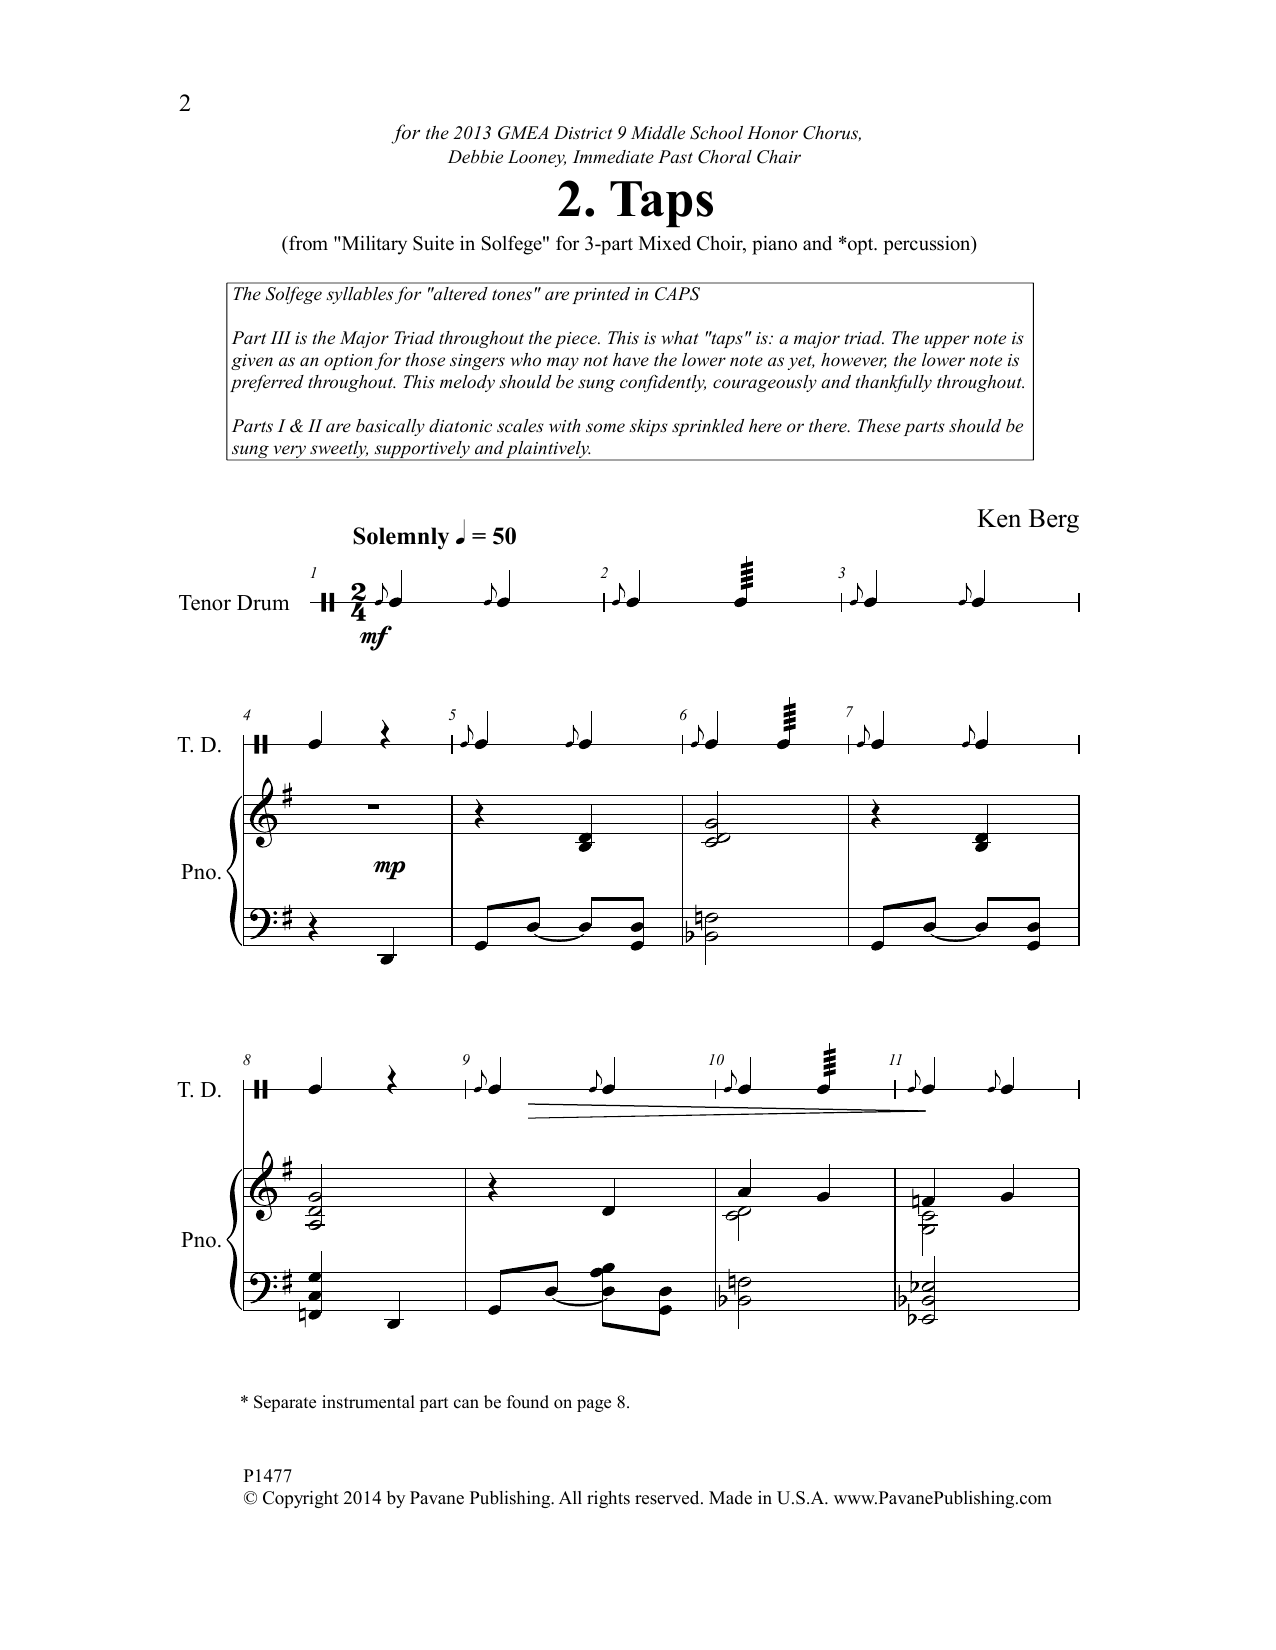 Ken Berg Taps sheet music notes and chords arranged for 3-Part Mixed Choir